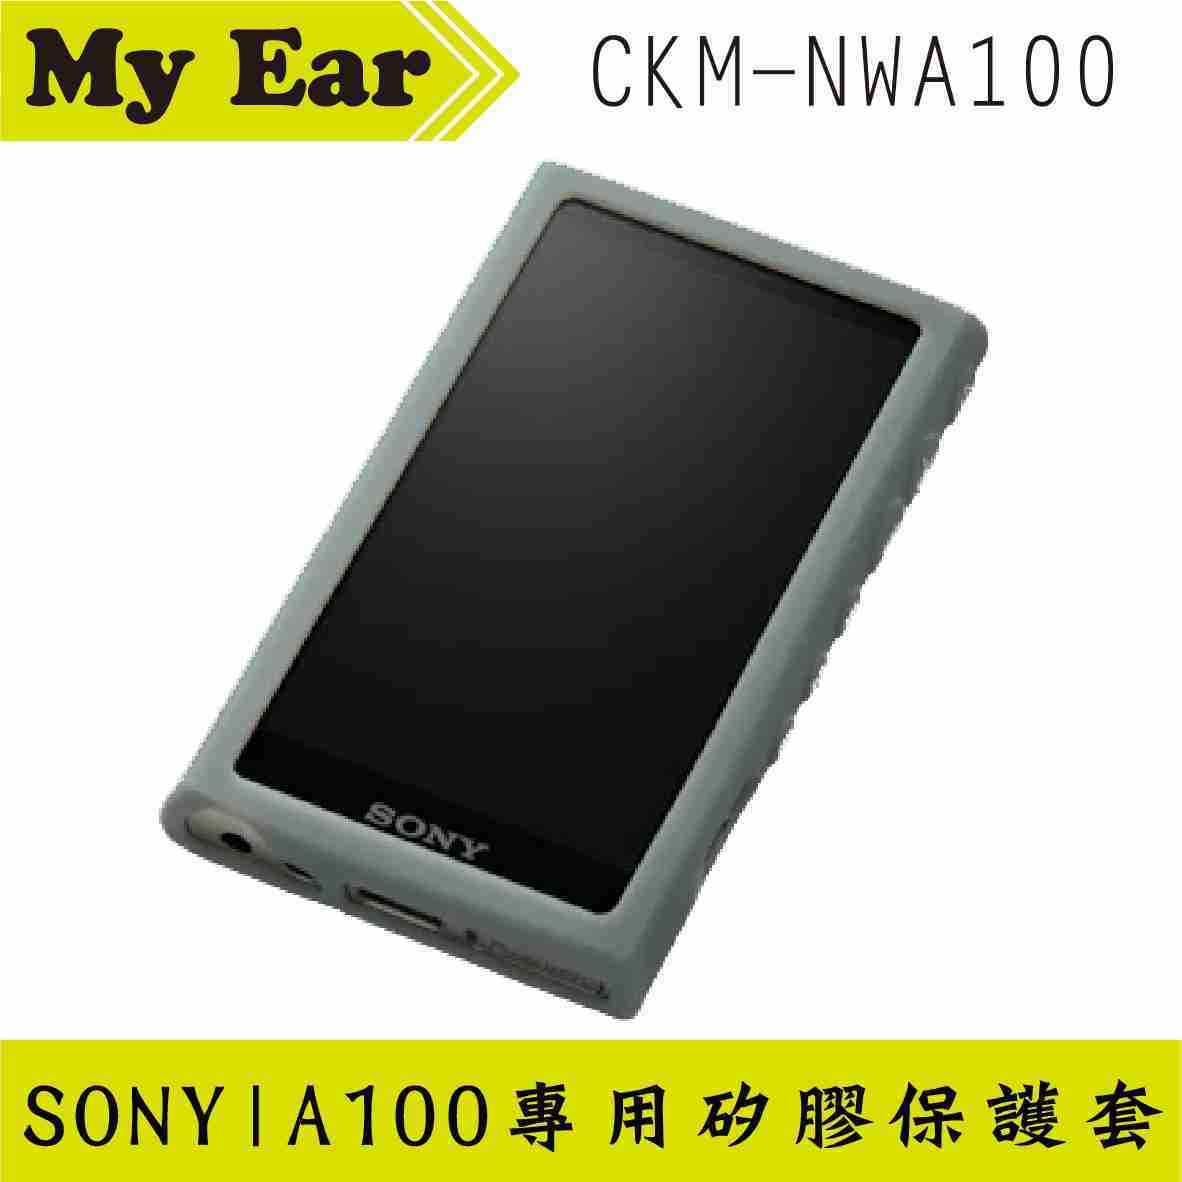 SONY 索尼 CKM-NWA100 紅色 Walkman® 專用矽膠保護殼 | My Ear 耳機專門店